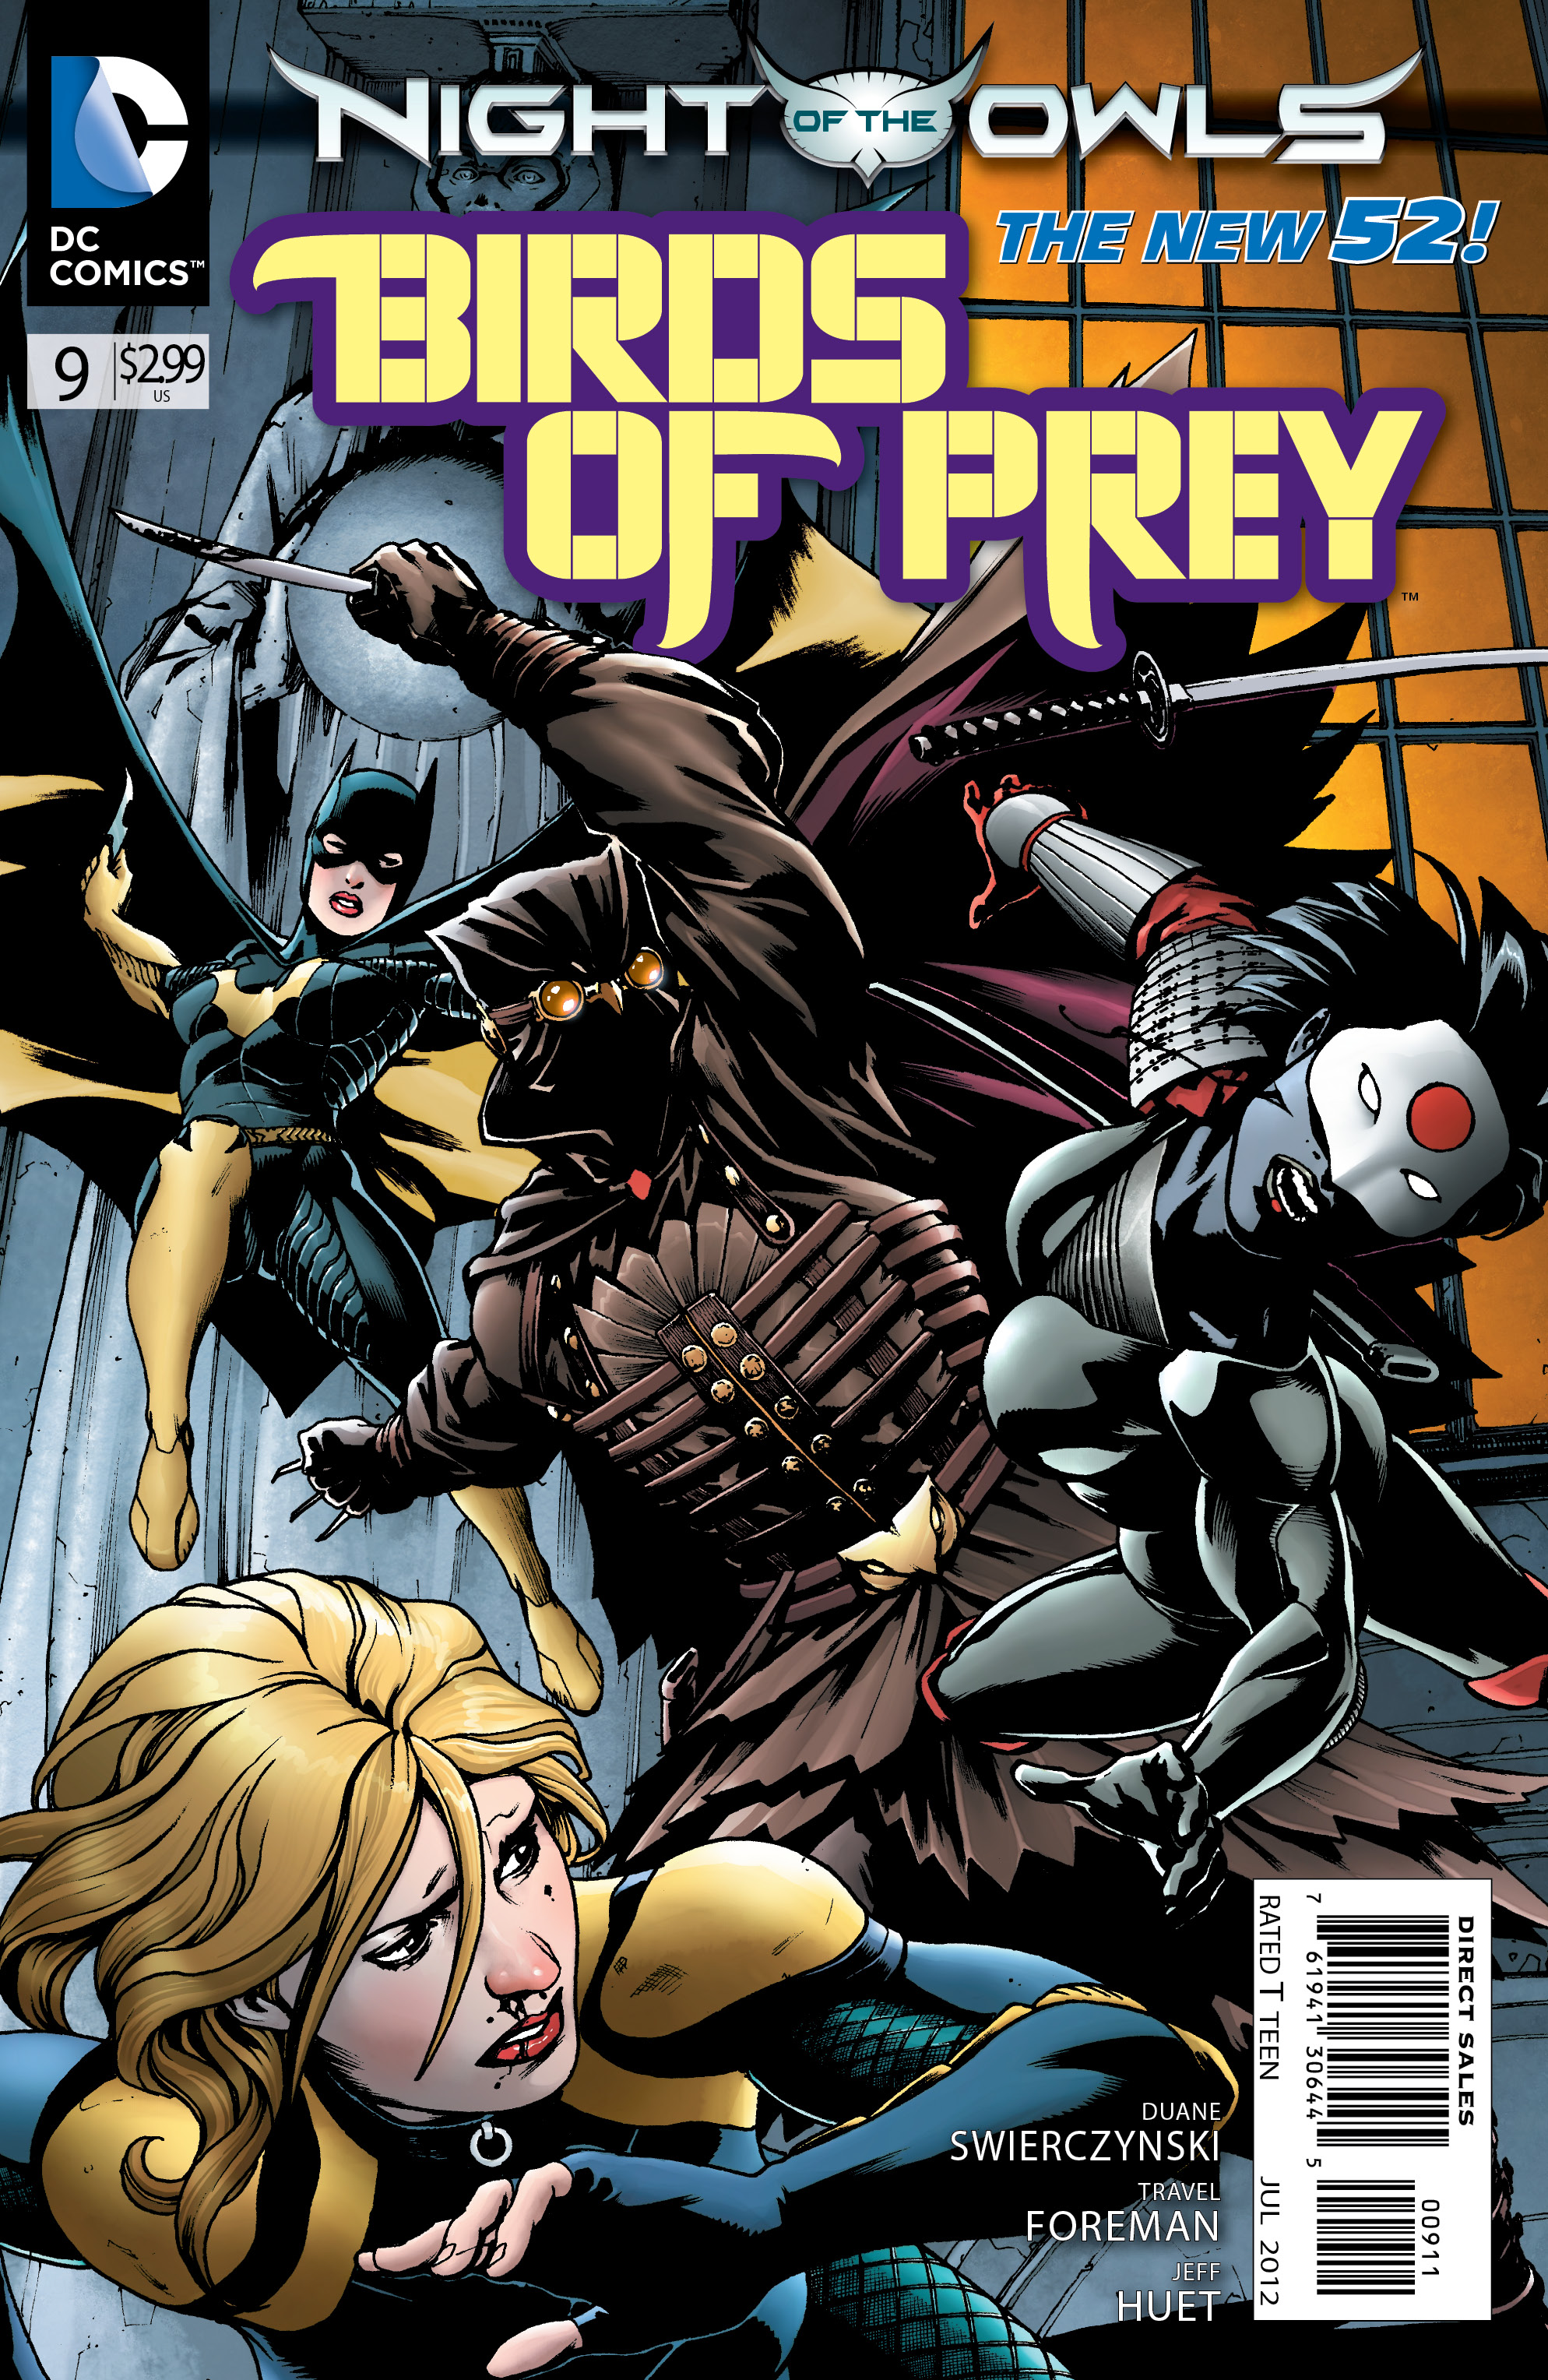 Birds of Prey, Batman Wiki